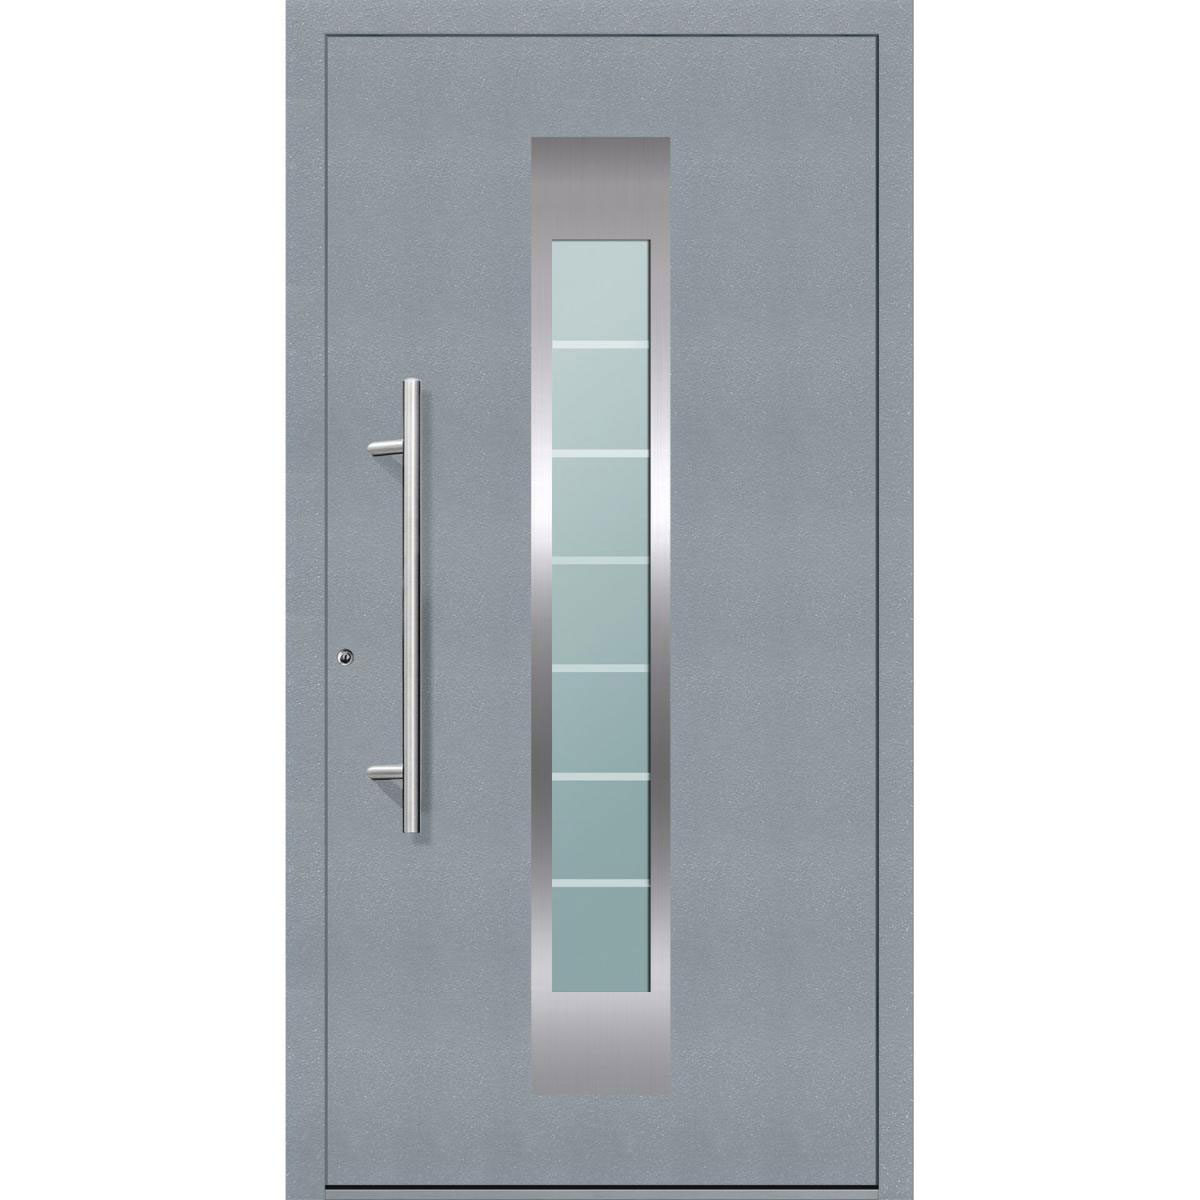 Aluminium Sicherheits-Haustür „Florenz Exklusiv“, 75mm, grau, 110x210 cm, Anschlag links, inkl. Griffset